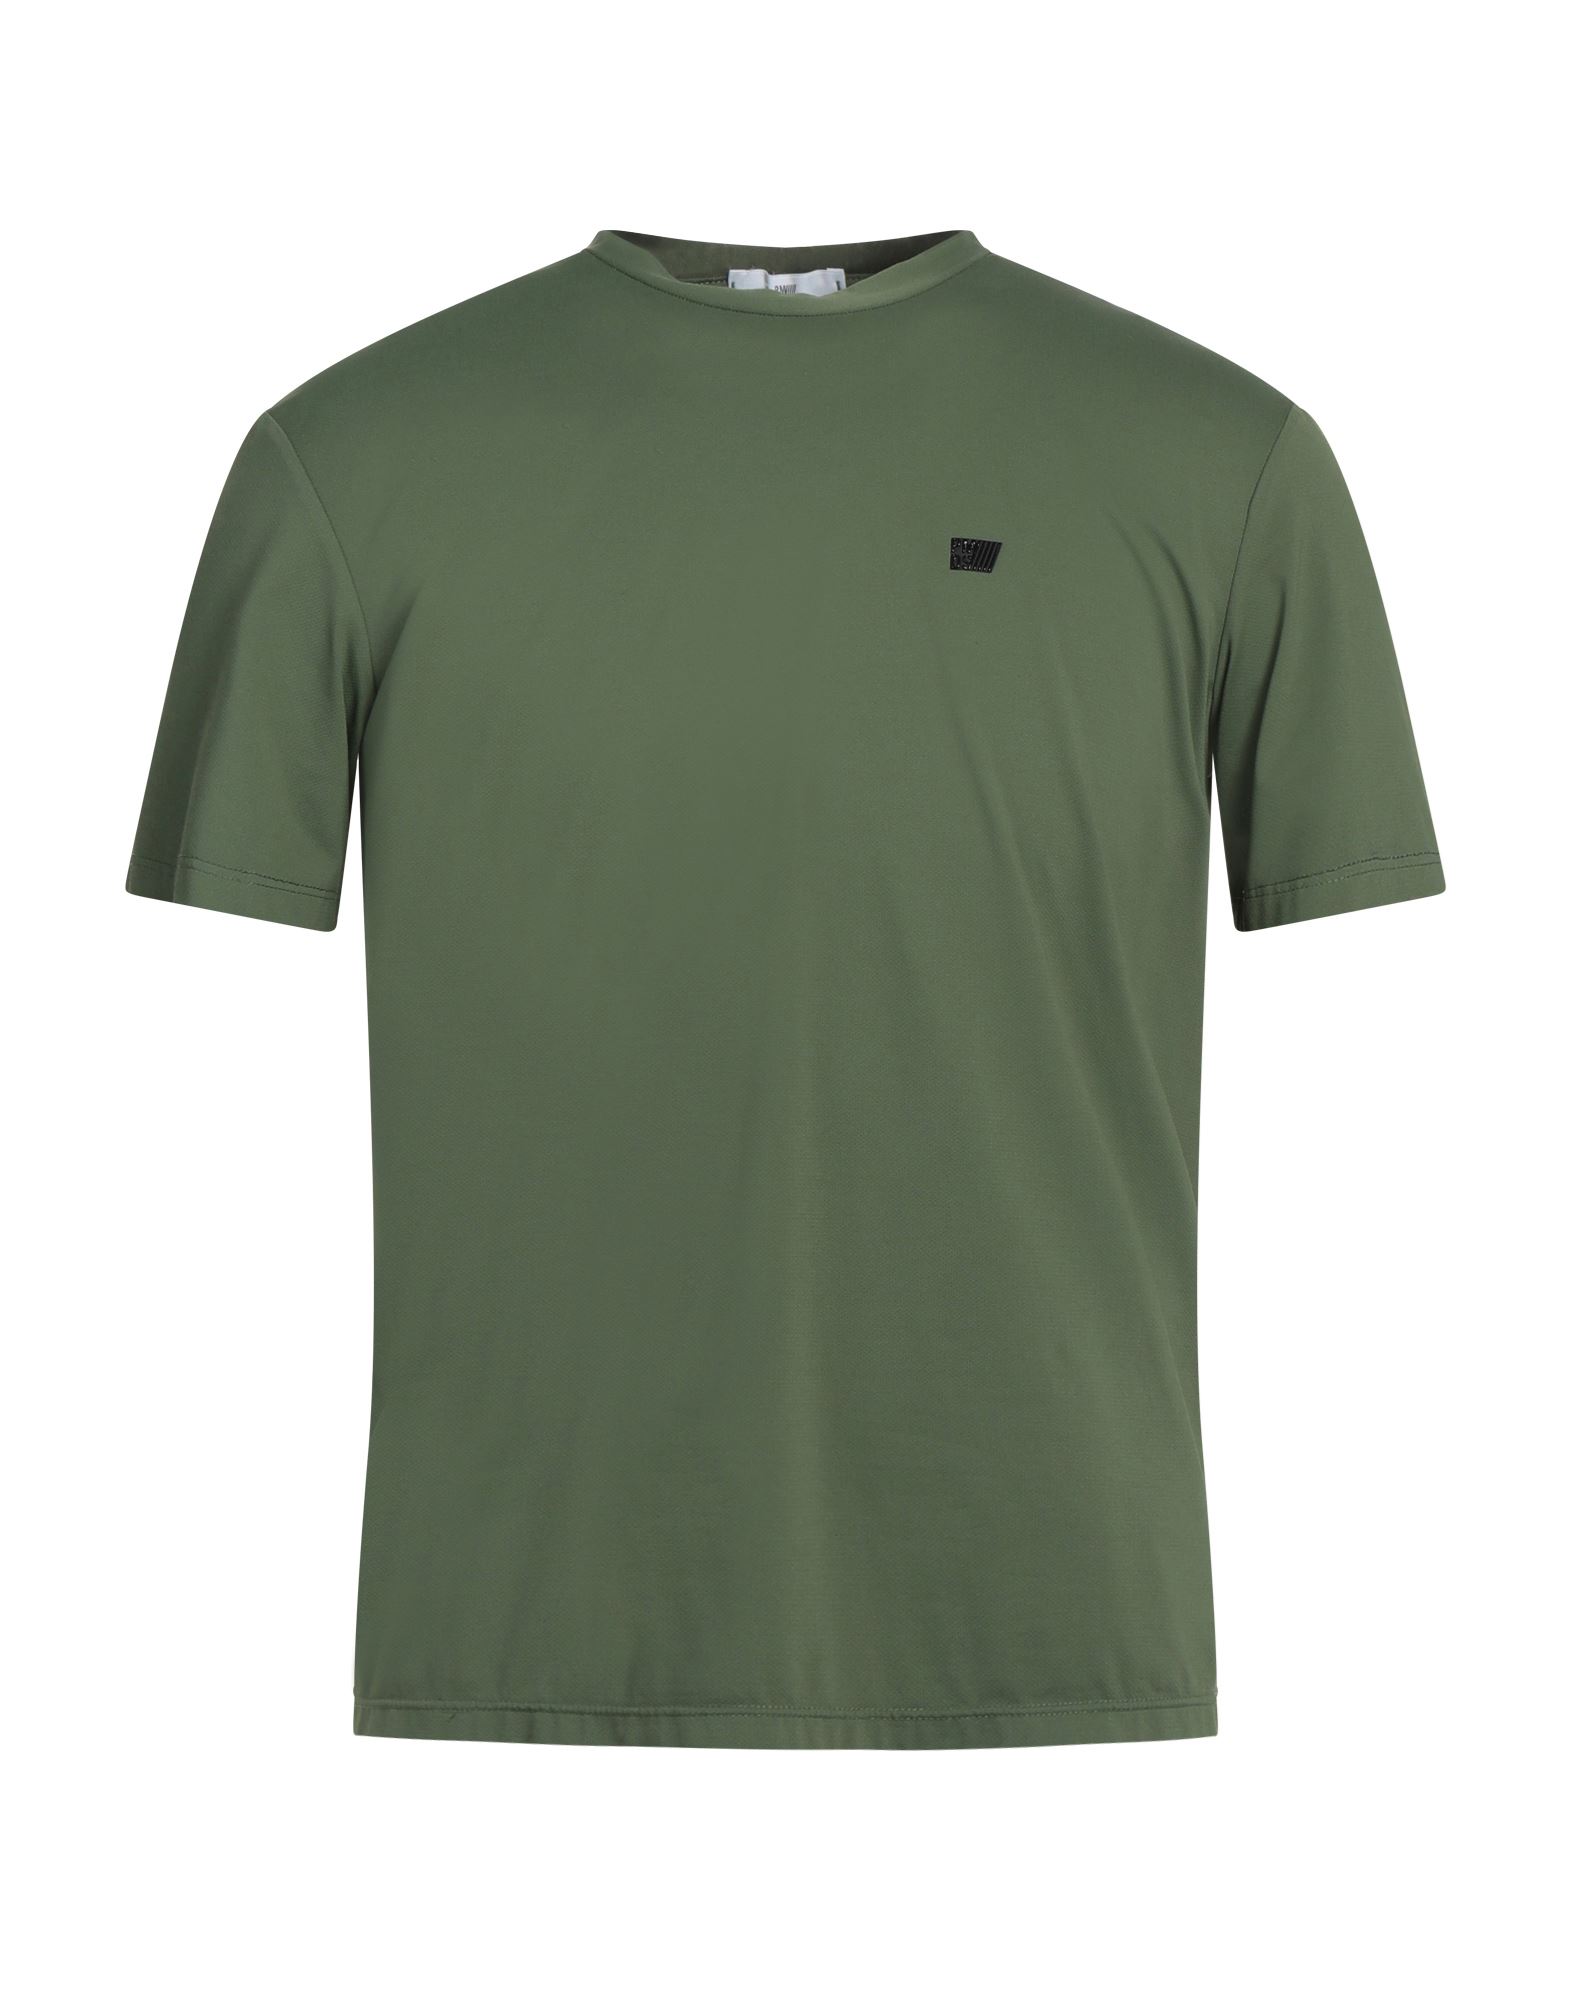 Pmds Premium Mood Denim Superior T-shirts In Military Green